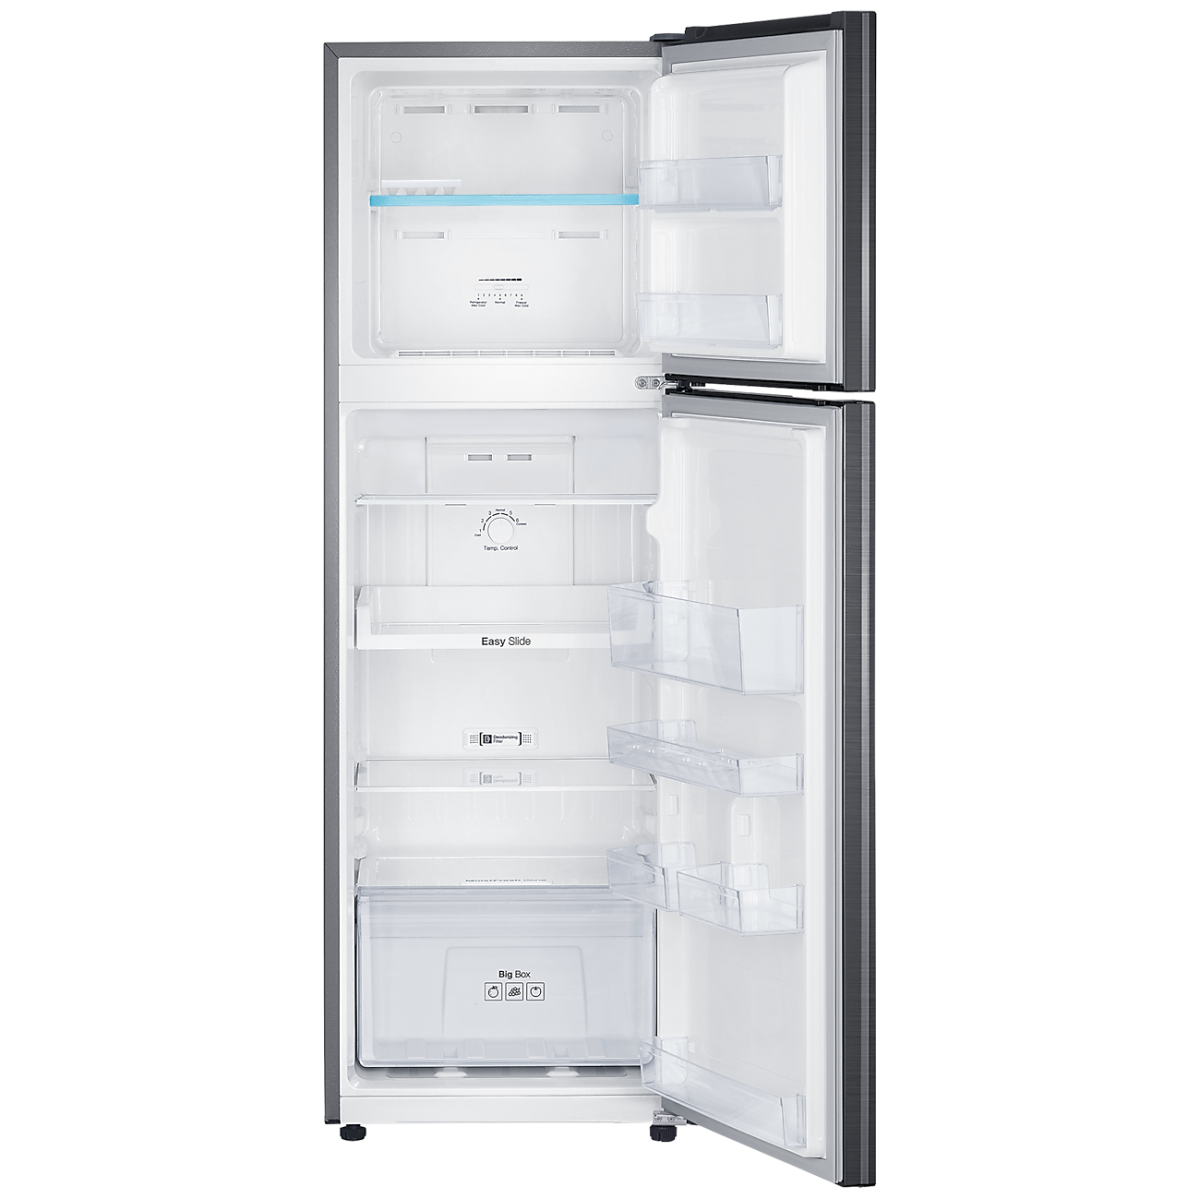 SAMSUNG 275 Liter Refrigerator Mono Cooling with Digital Inverter Technology RT29HAR9DBS/D3, Best Refrigerators of Year, Top-rated Refrigerators, Refrigerator Reviews, Refrigerator Comparison, Buying a Refrigerator Guide, Refrigerator Deals and Offers